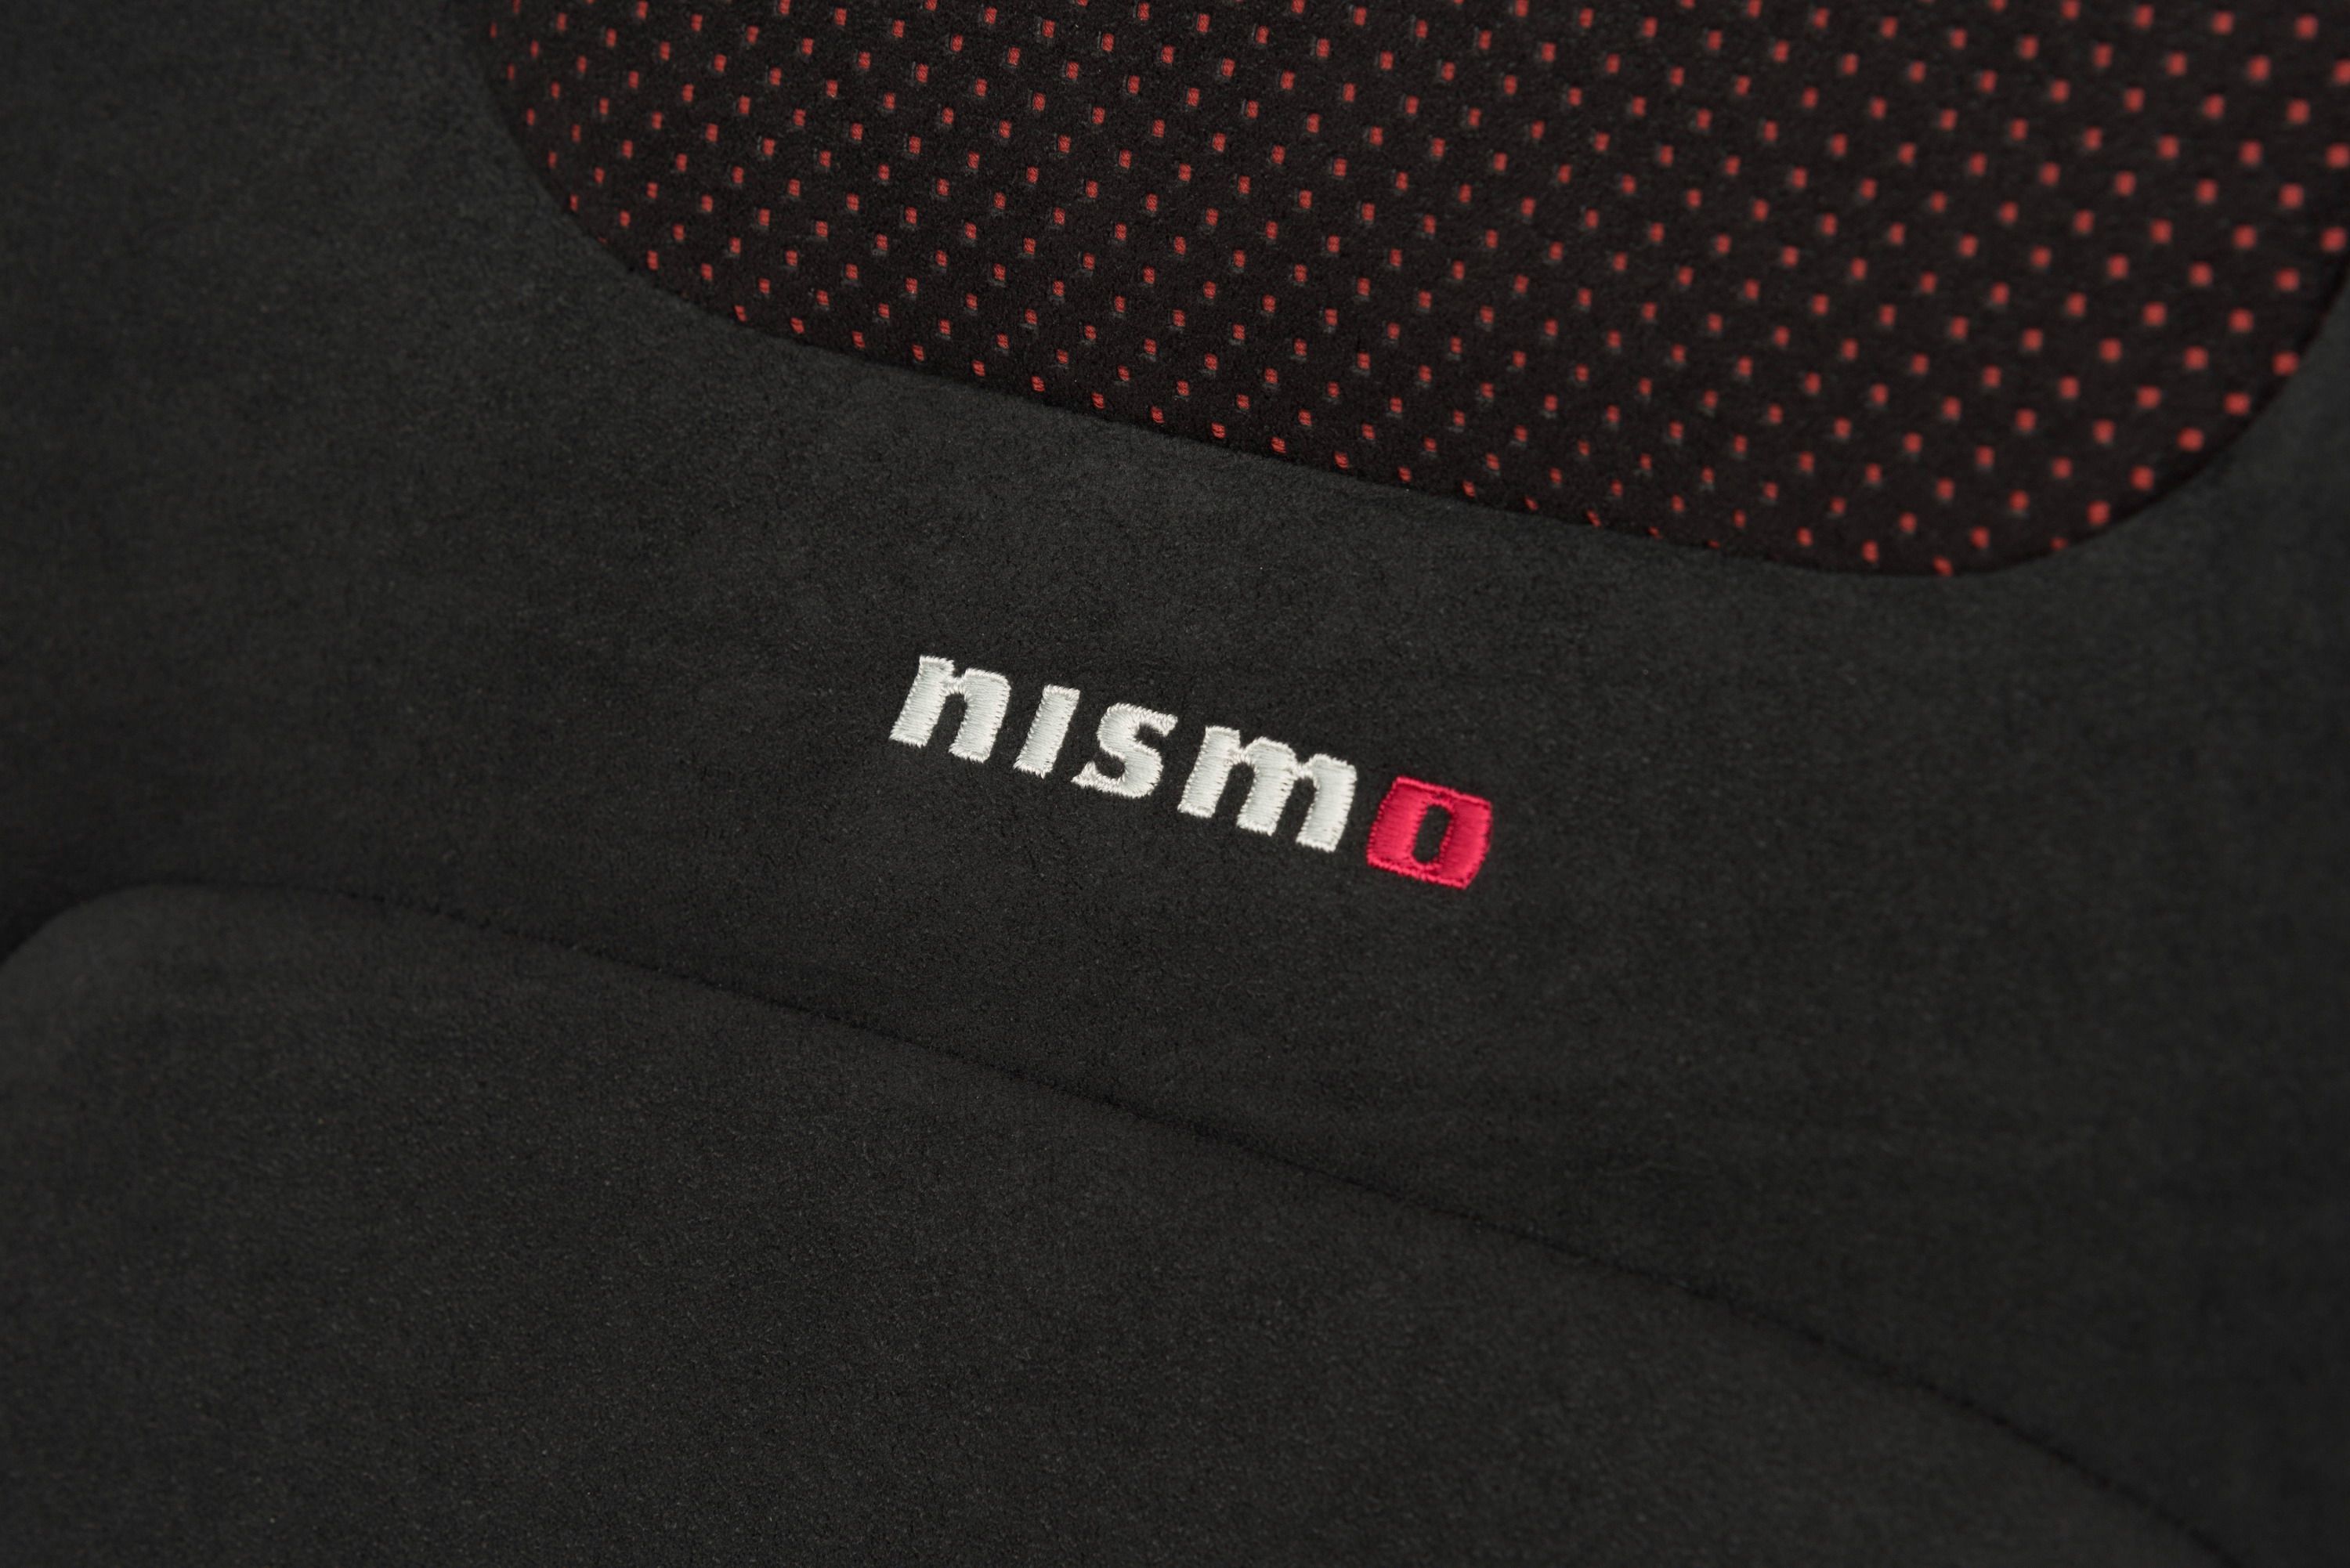 2017 Nissan Sentra NISMO